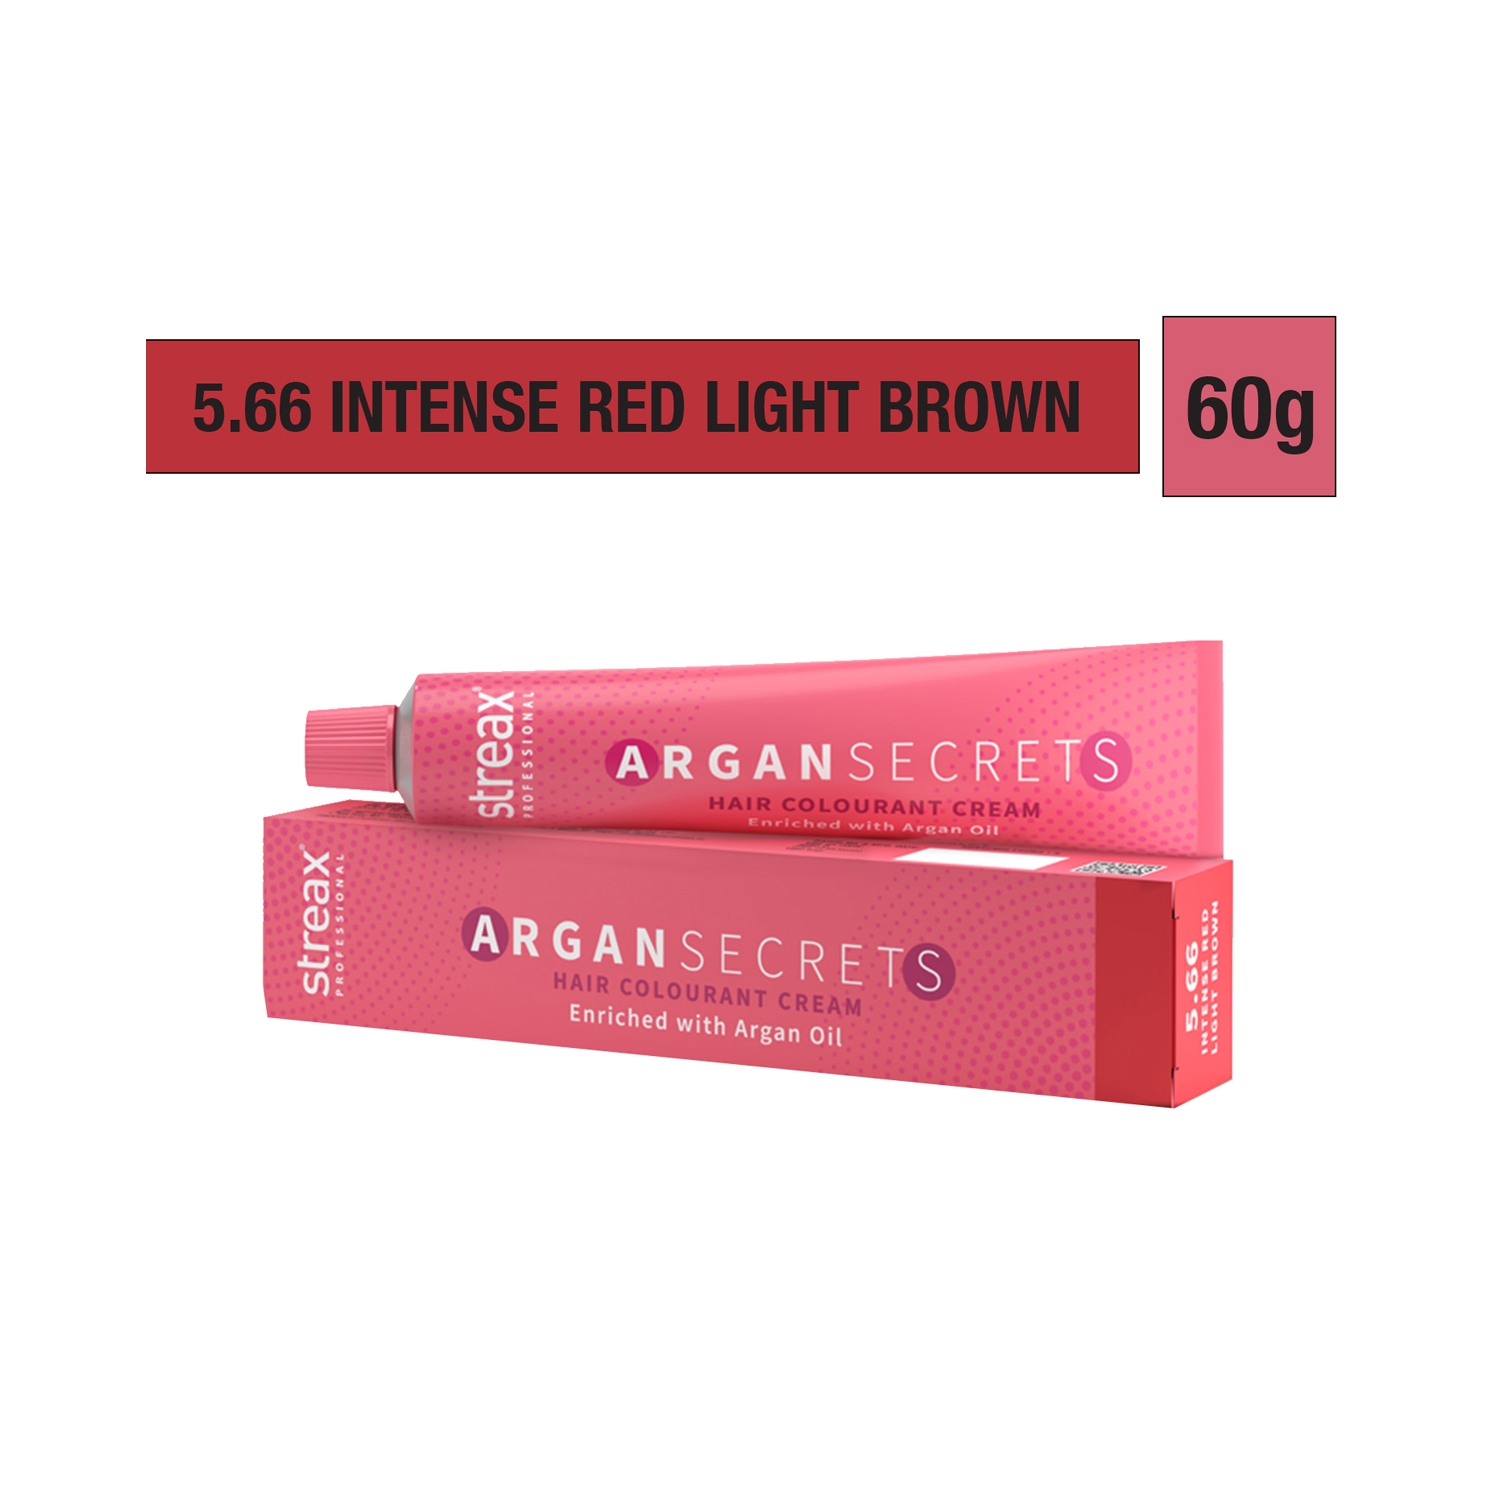 Streax Professional Argan Secrets Hair Colorant Cream - 5.66 Intense Red Light Brown (60g)